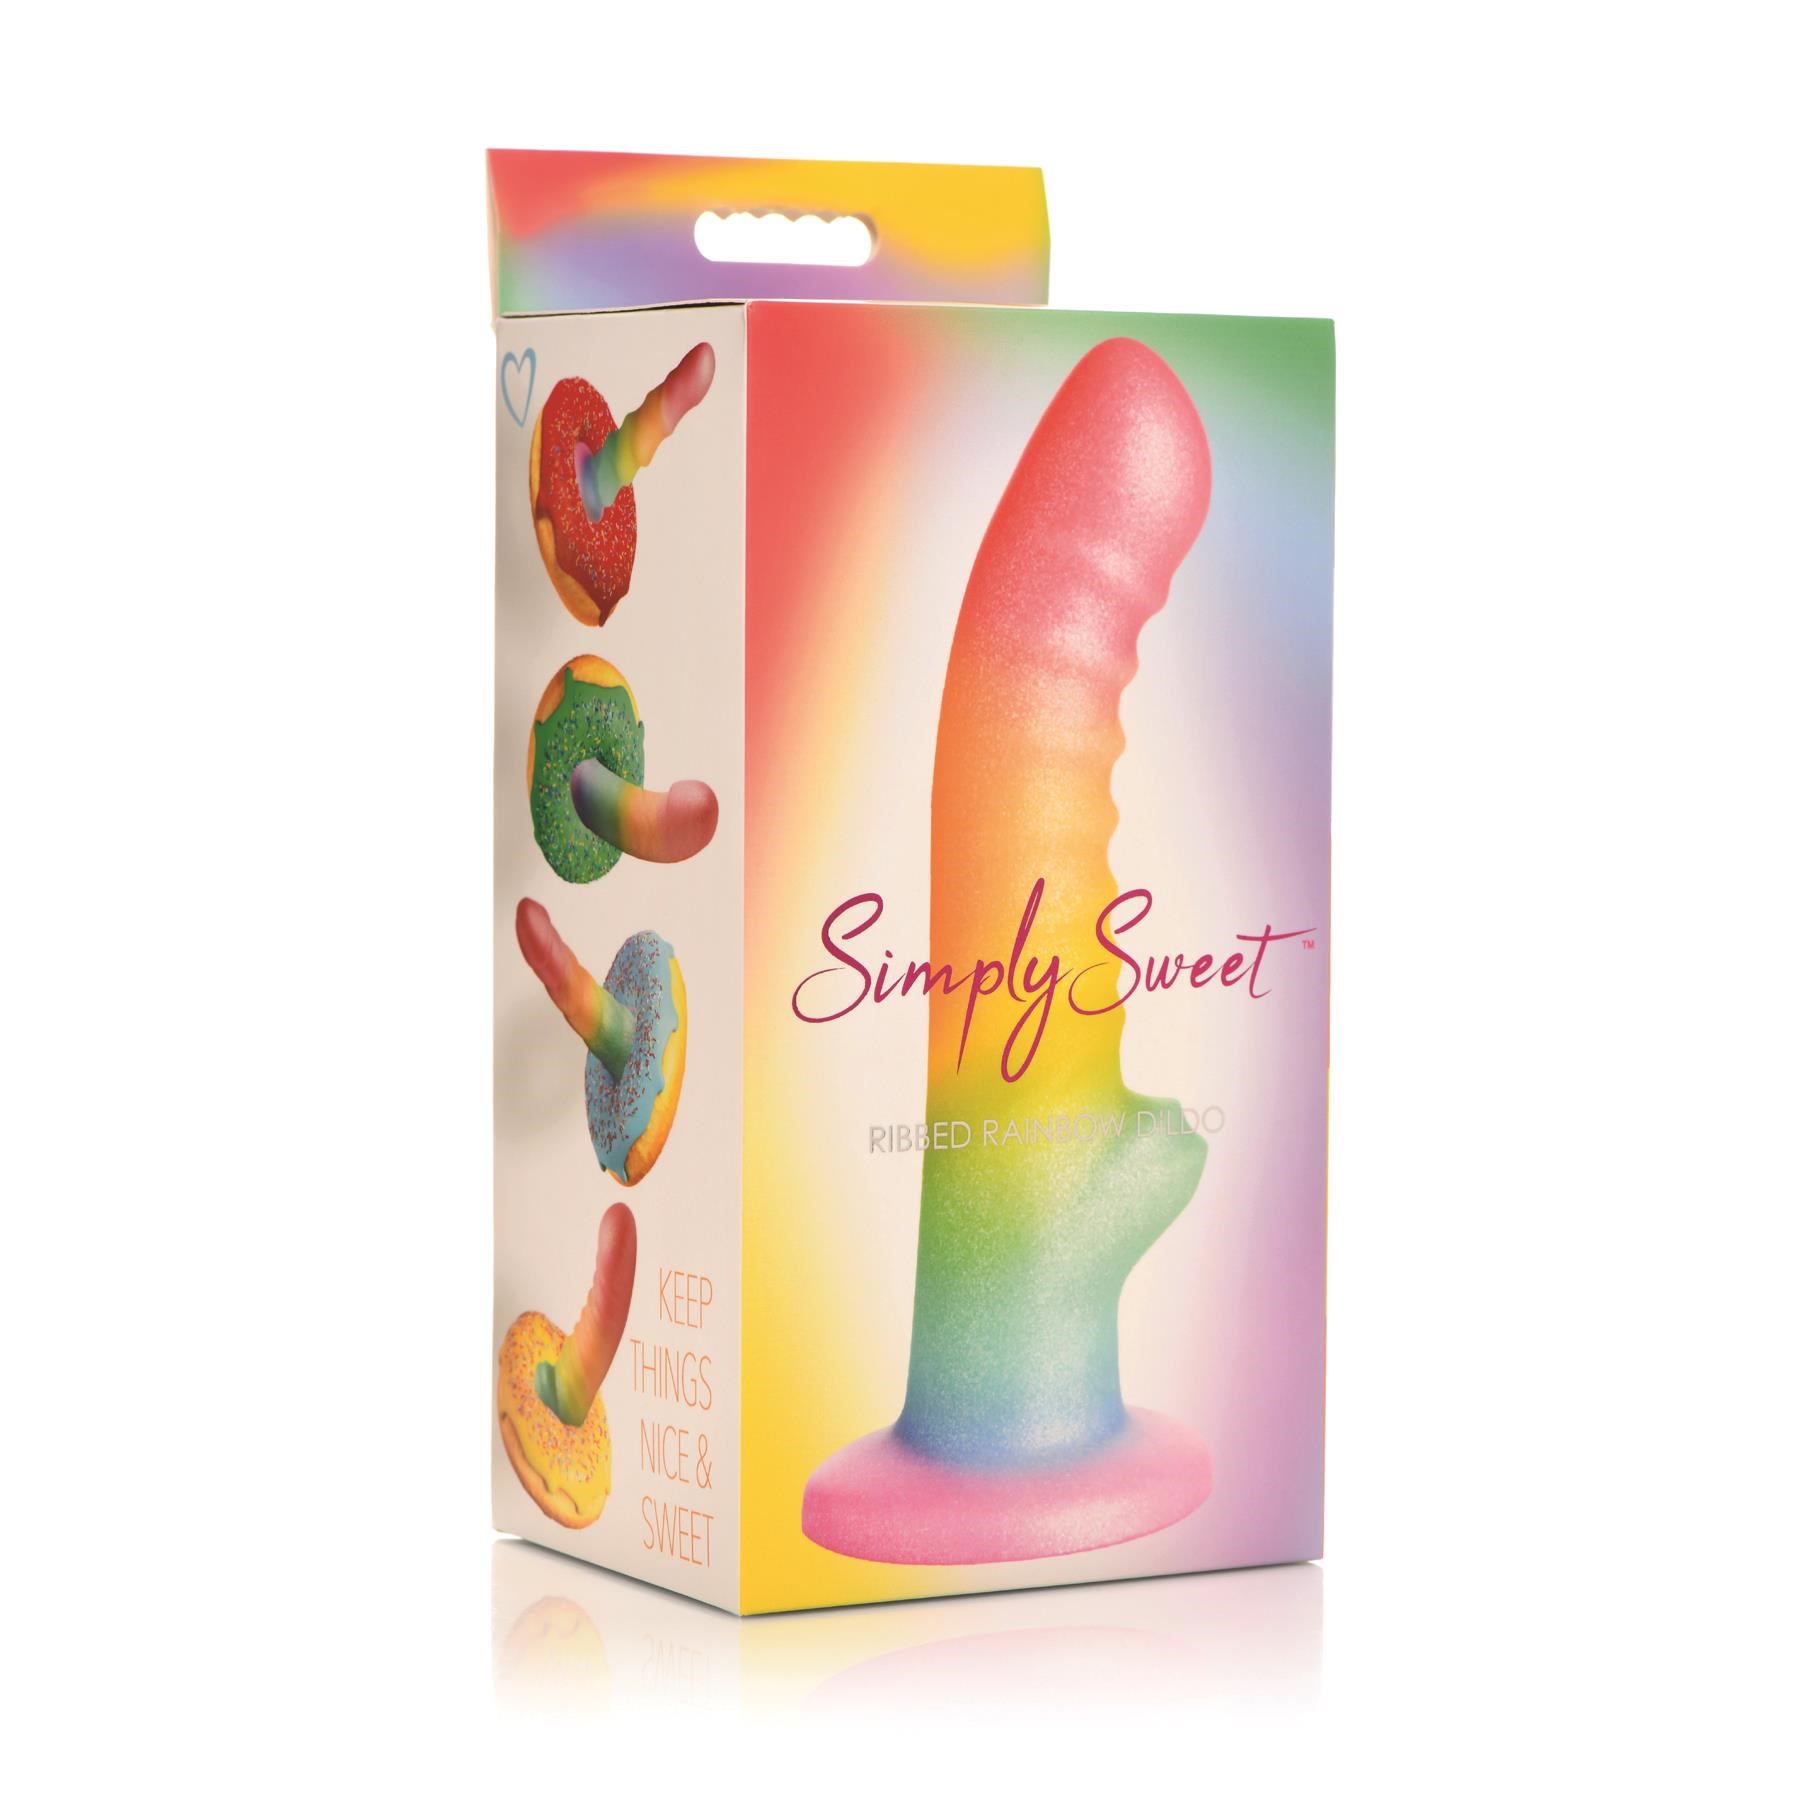 Simply Sweet Ribbed Rainbow Dildo - Packaging Shot